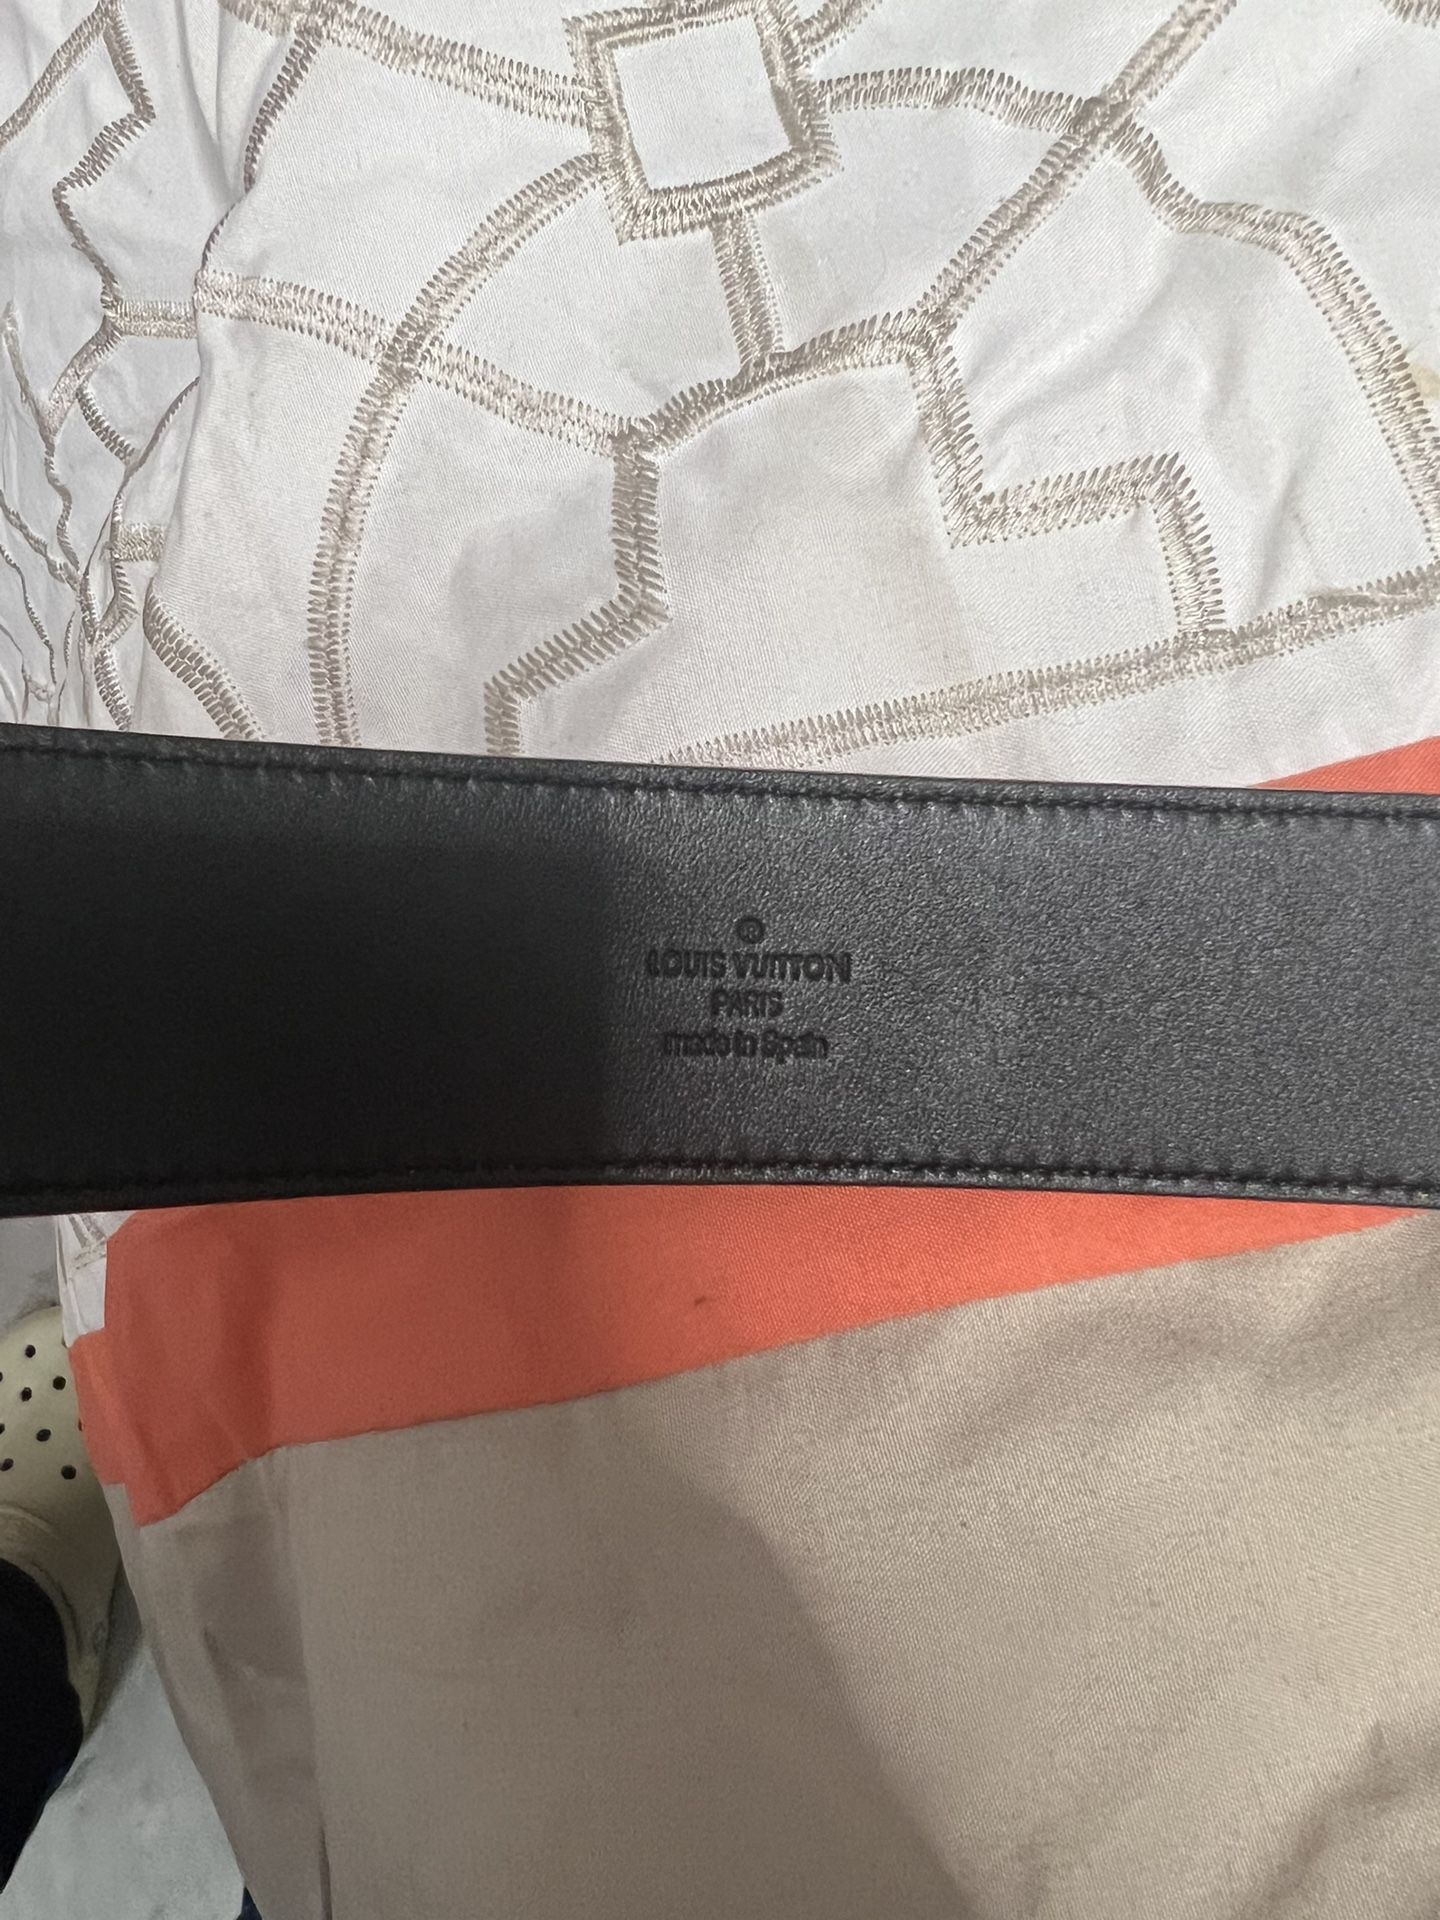 Louis Vuitton x Supreme Monogram Belt Black Size 30-33 (42/105) for Sale in  Conyers, GA - OfferUp